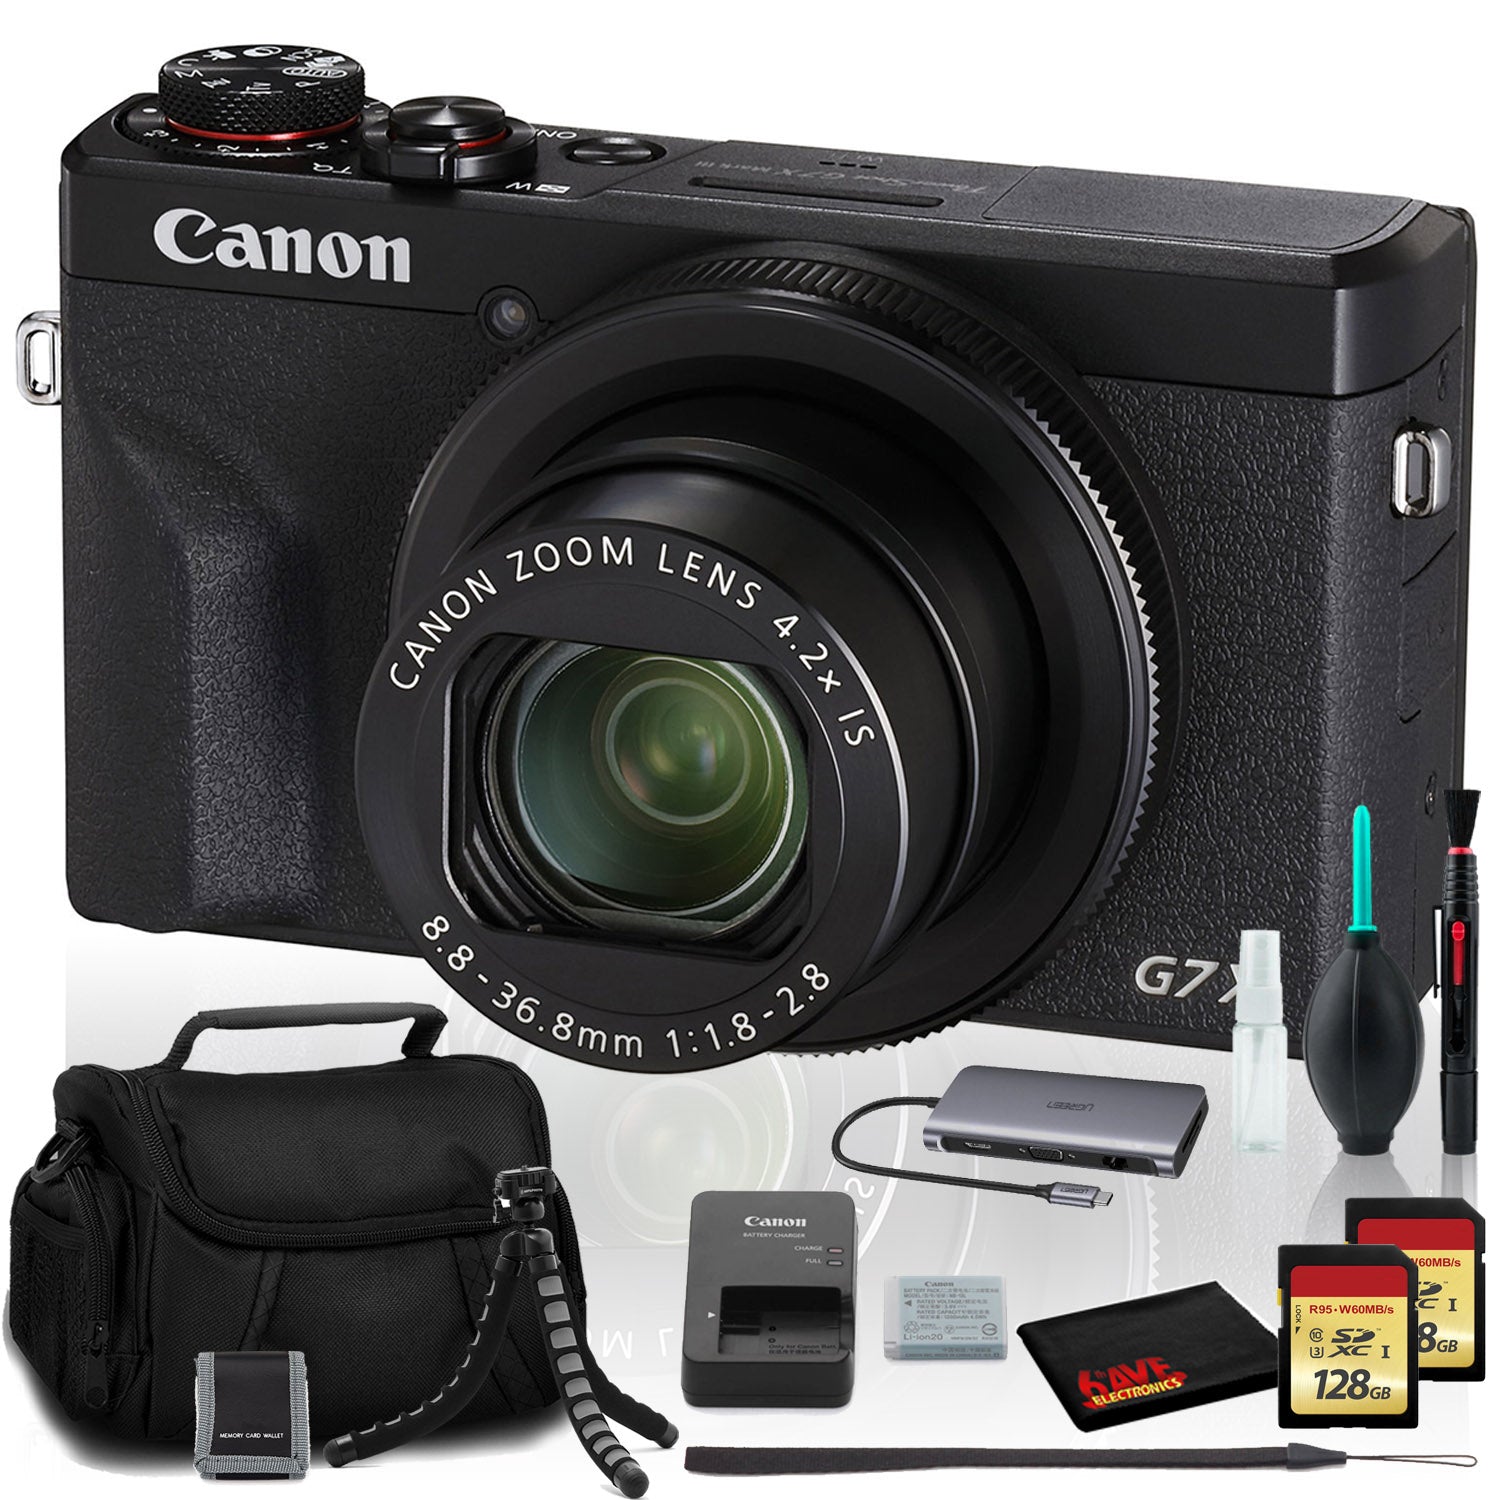 Canon PowerShot G7 X Mark III Digital Camera (Intl Model) with Two 128GB SD Bundle